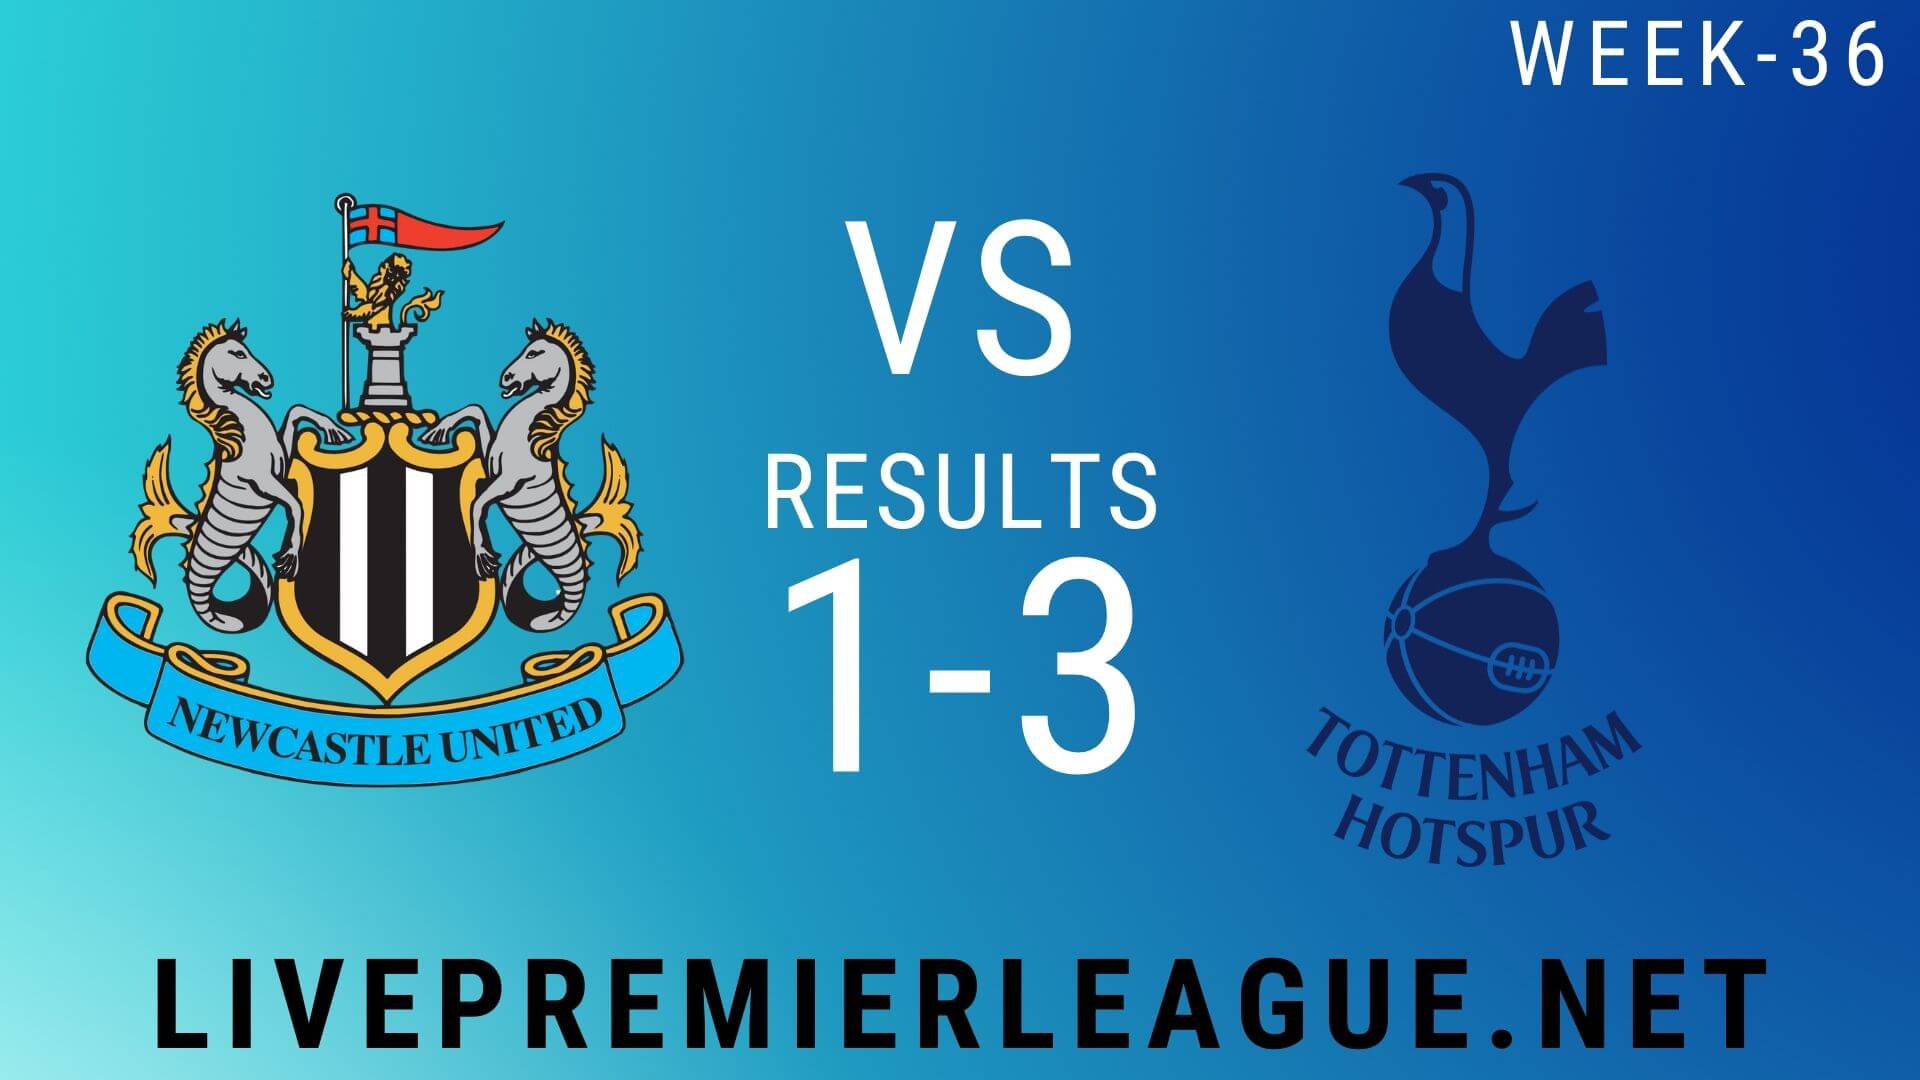 Newcastle United Vs Tottenham Hotspur | Week 36 Result 2020